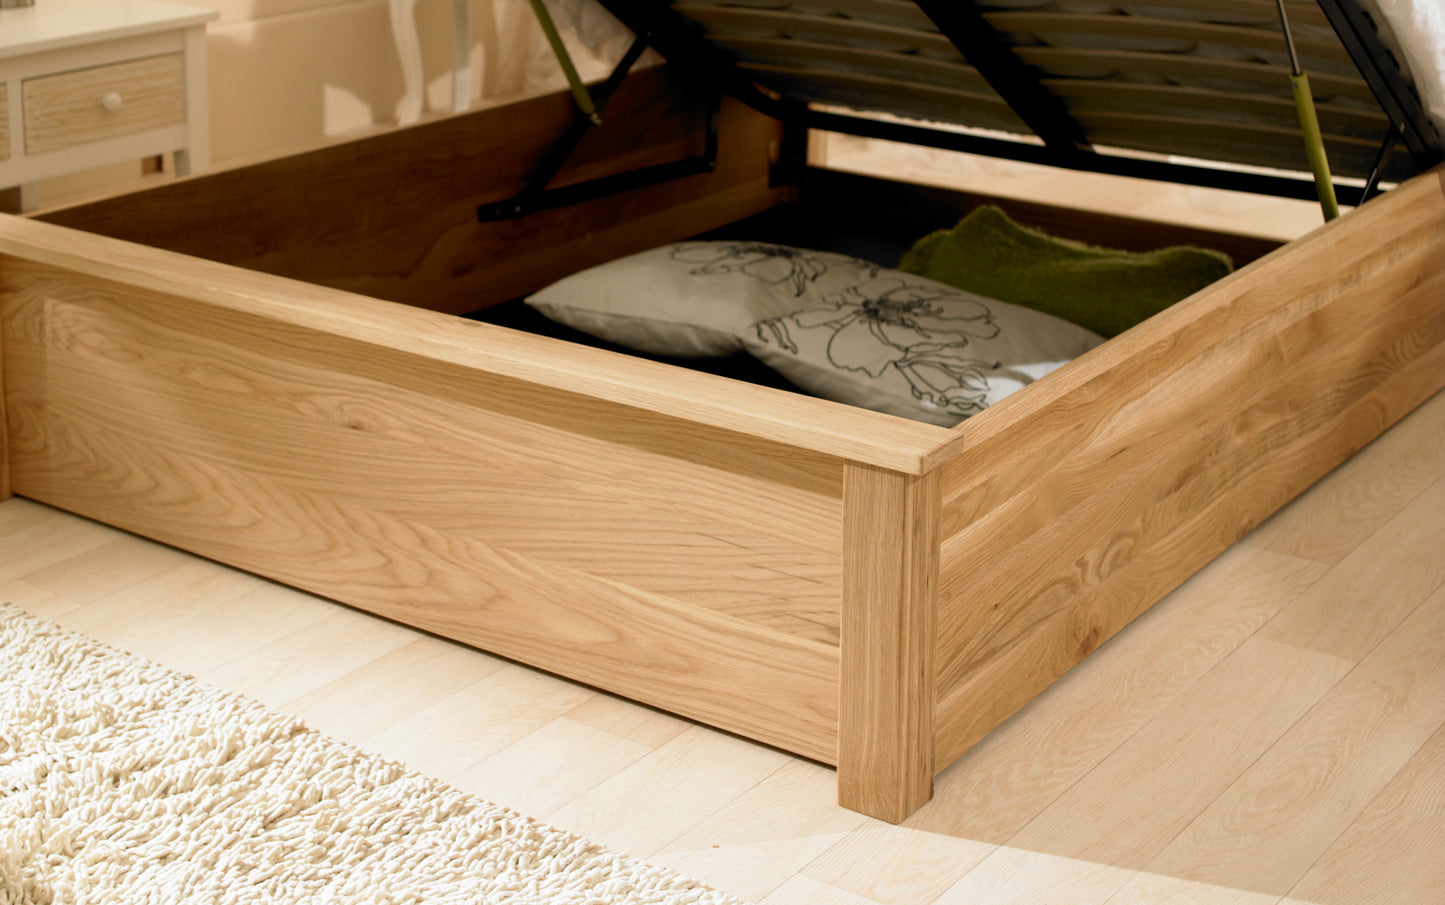 Monaco Solid Oak Ottoman Lift-up Storage Bed - NIXO Furniture.com